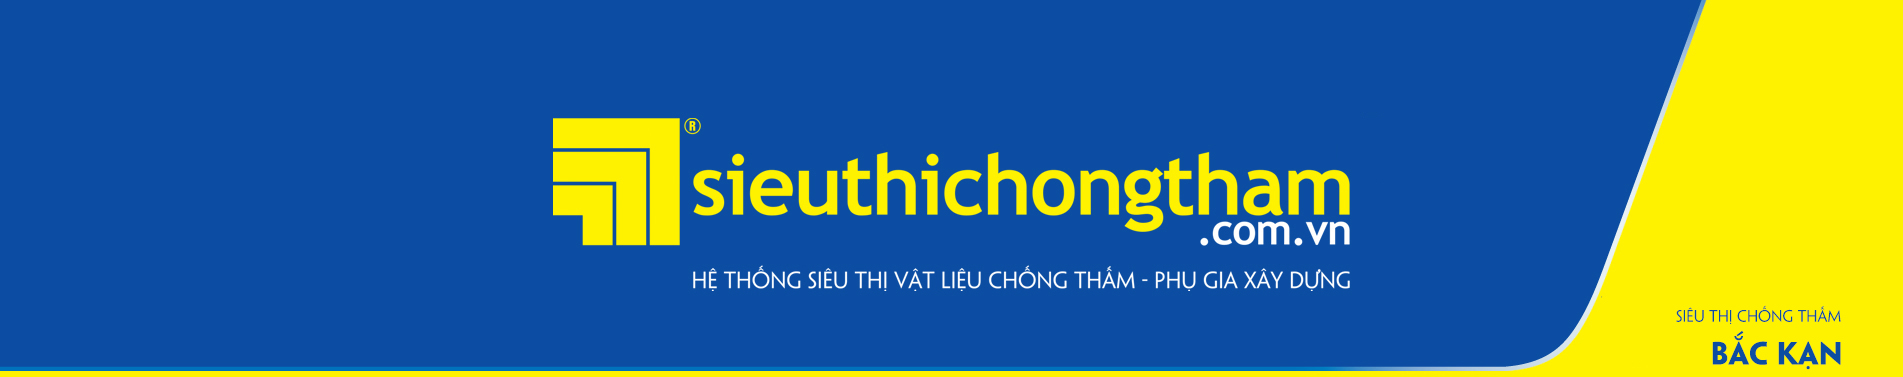 Sieu Thi Chong Tham Bac Kan